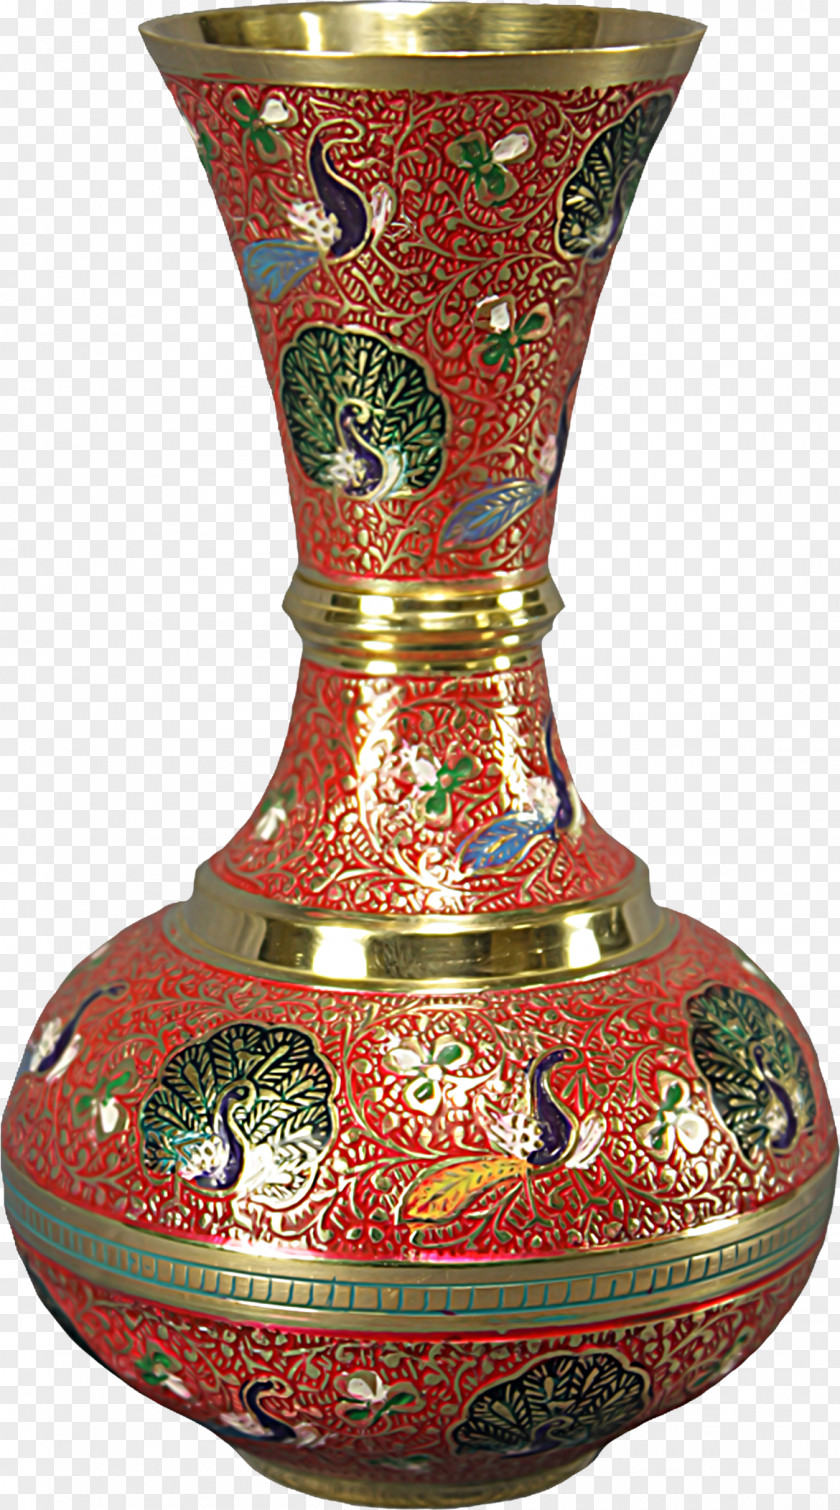 Dubai Ceramic Bottle Material Free To Pull Vase Of Flowers PNG